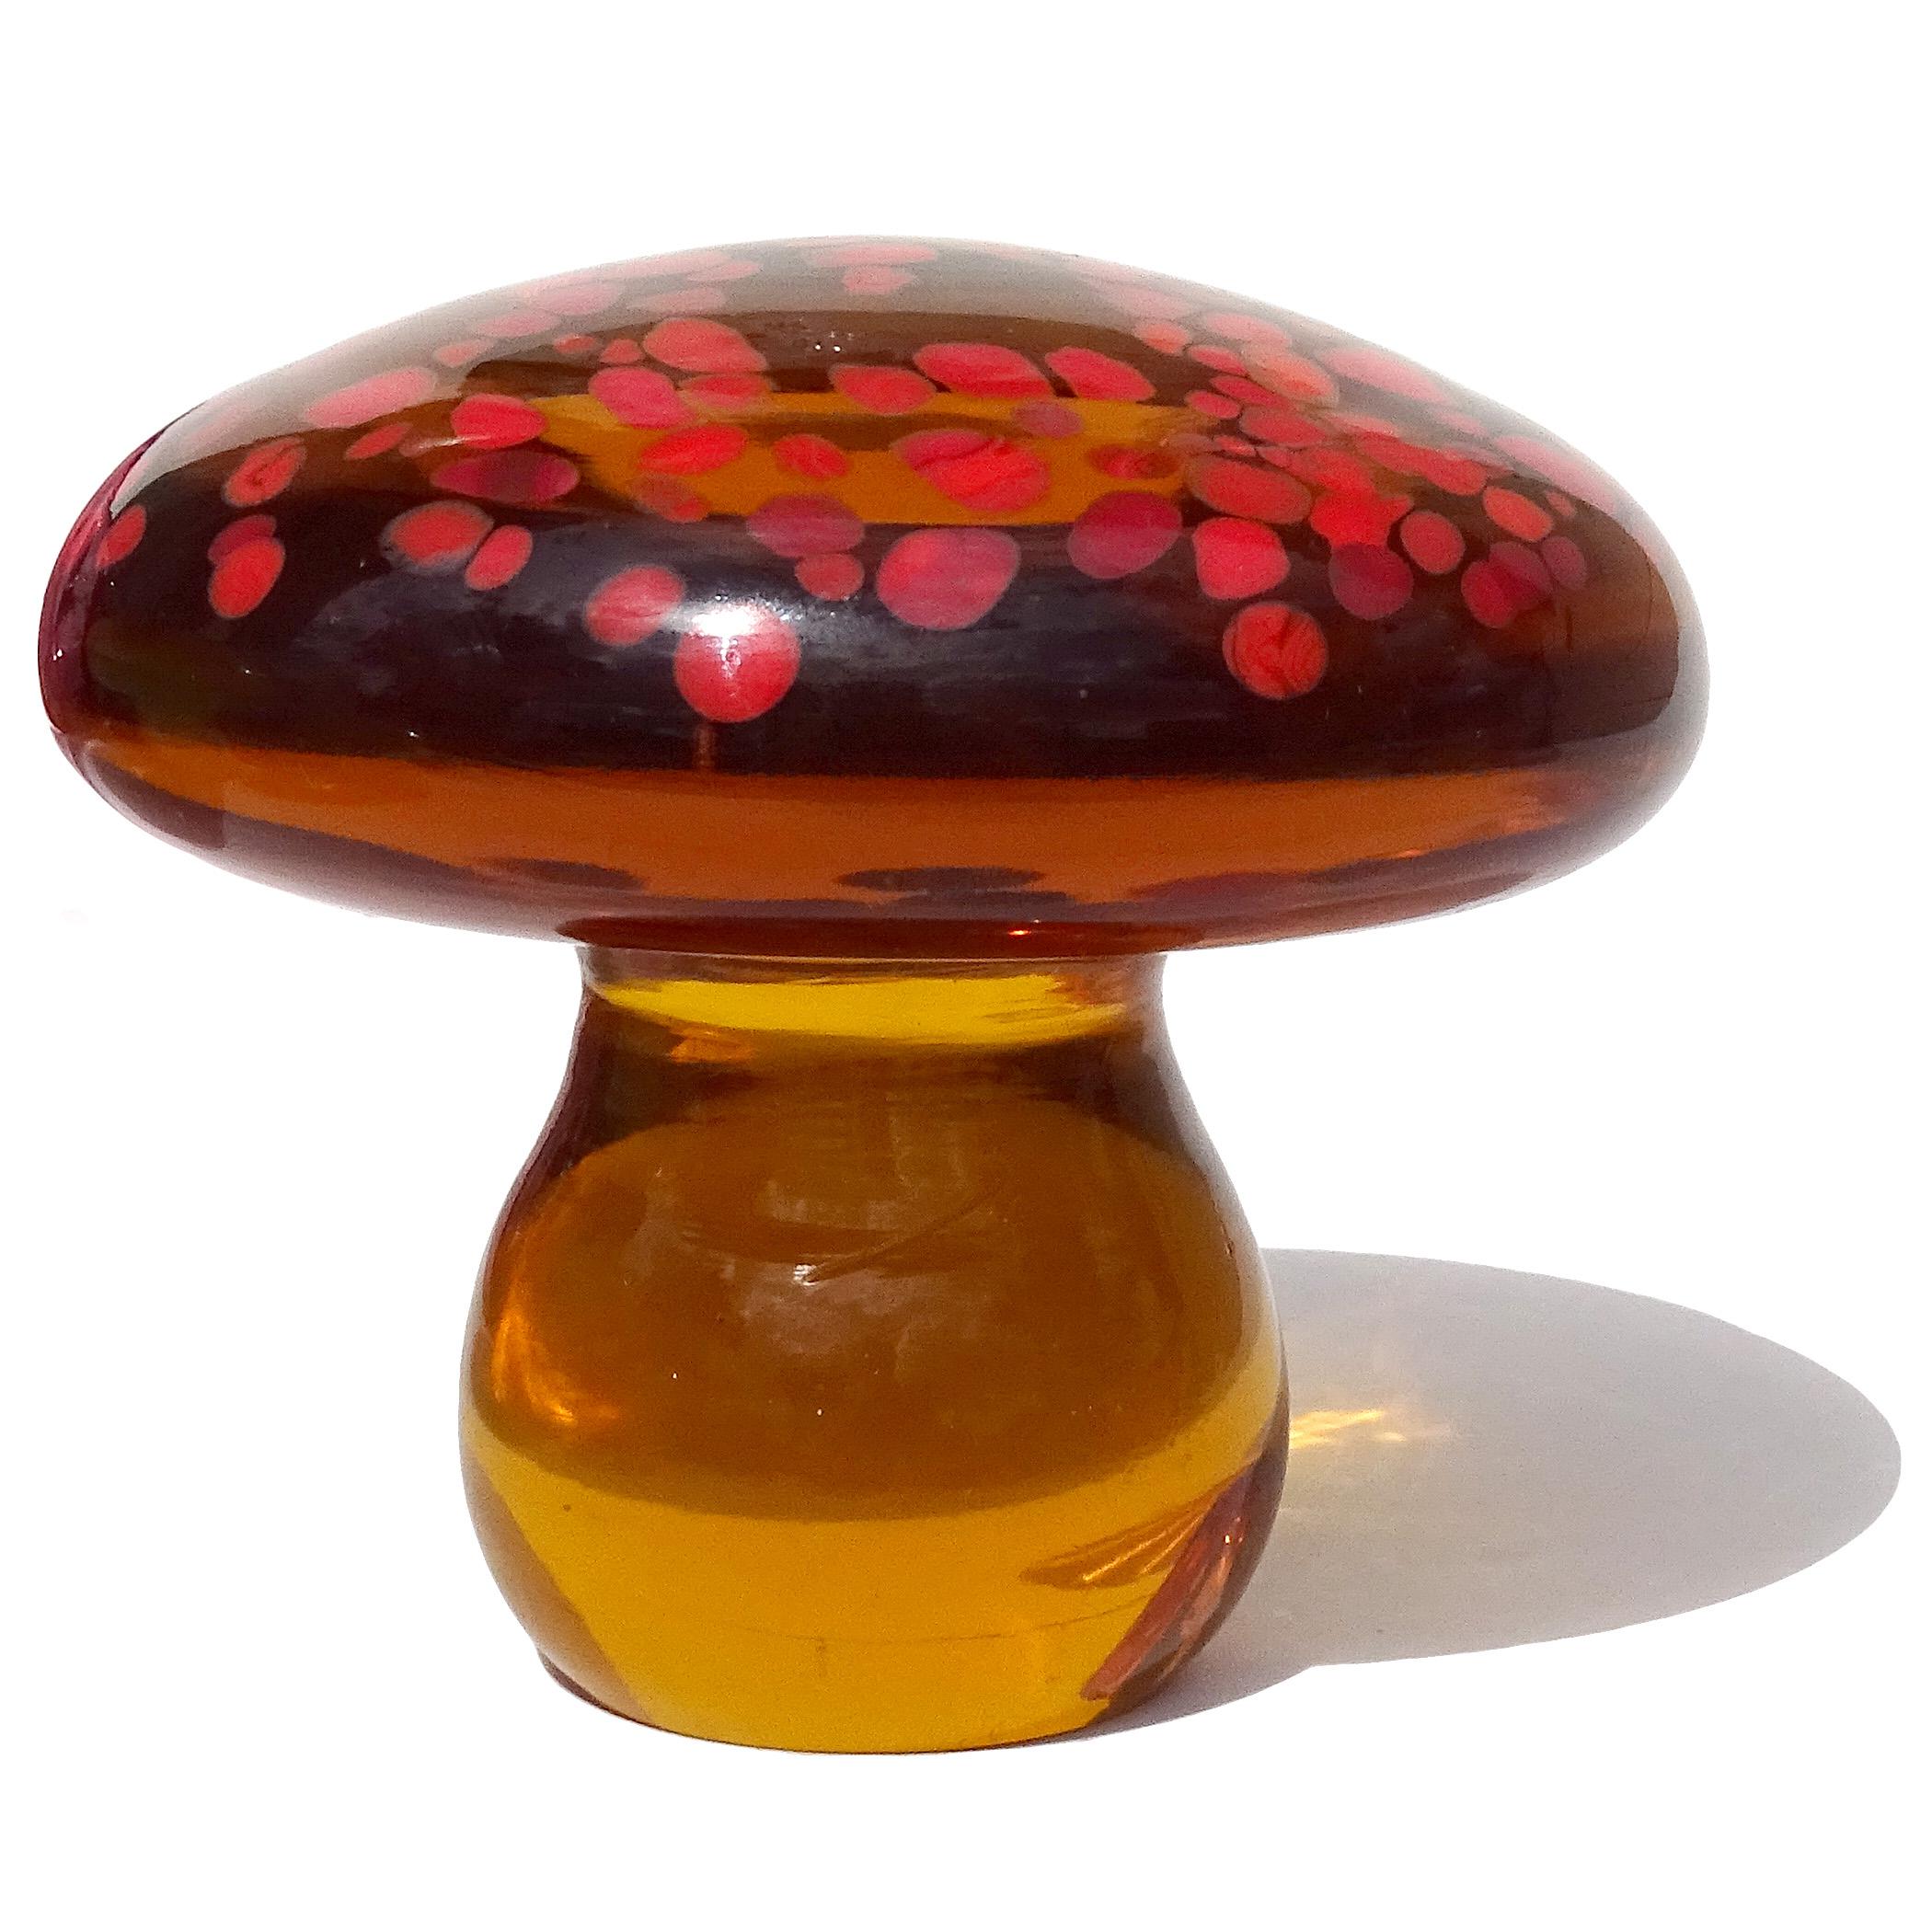 Beautiful vintage Murano hand blown honey amber with red-orange spots Italian art glass mushroom / toadstool paperweight. Created for the Fornasa De Murano A L'Insegna Del Moreto company, by designer Galliano Ferro. The piece still retains an